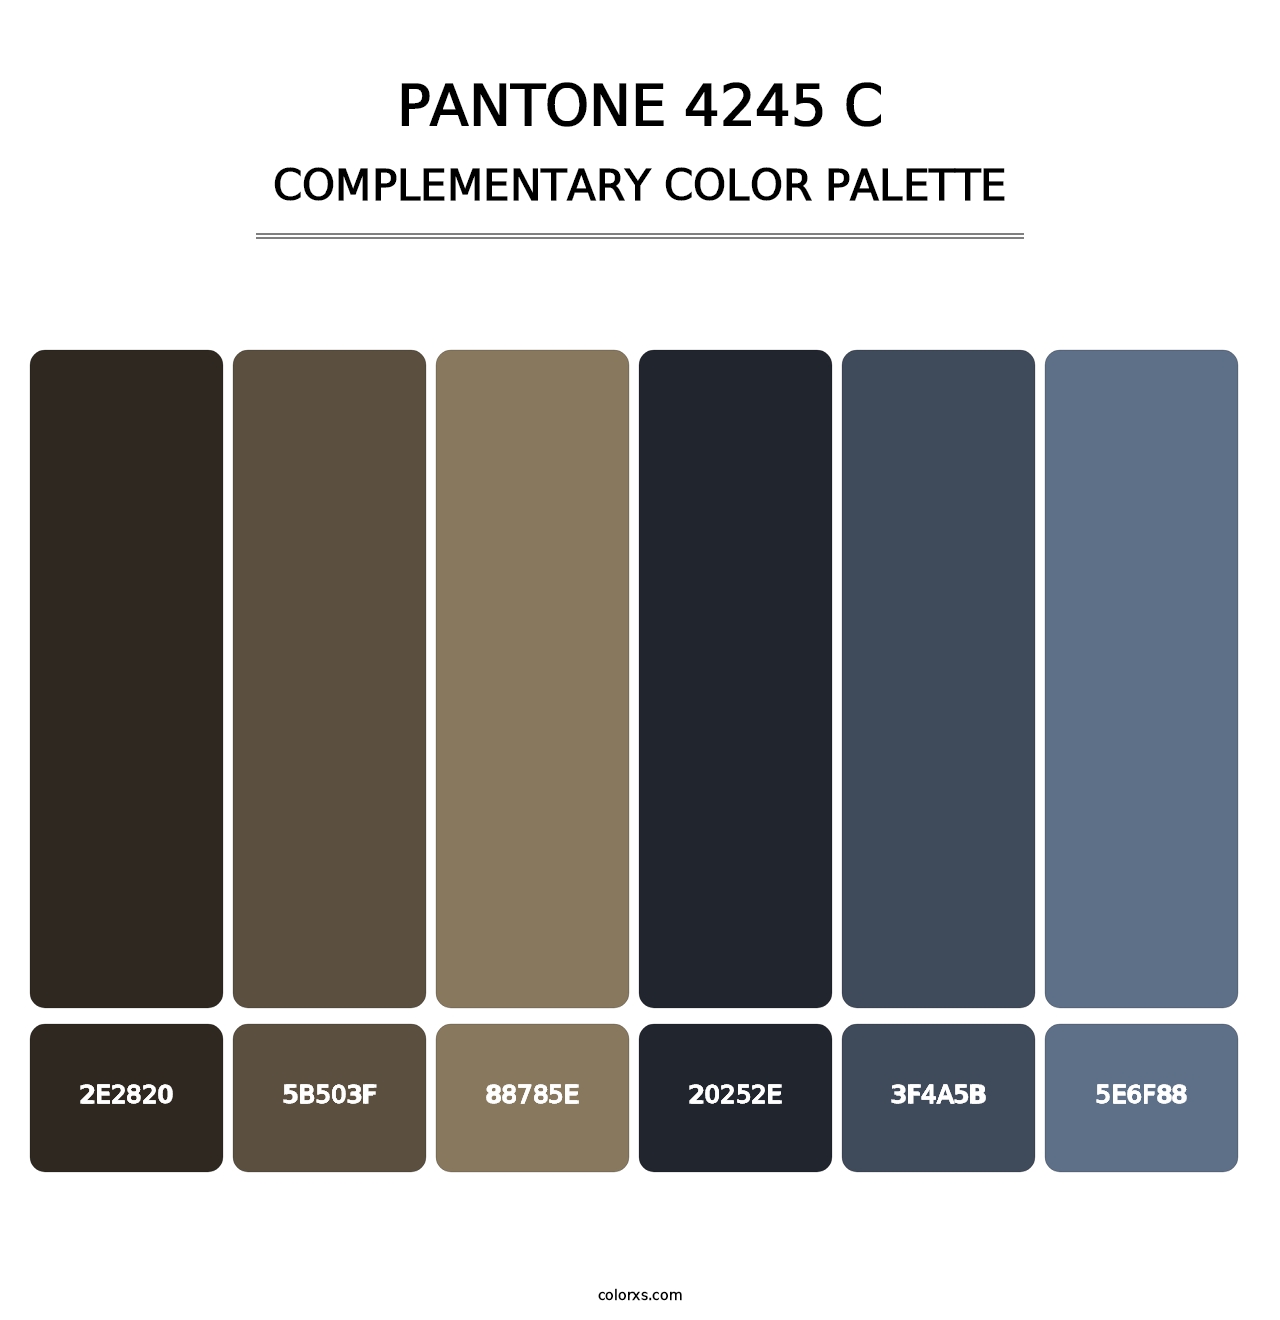 PANTONE 4245 C - Complementary Color Palette